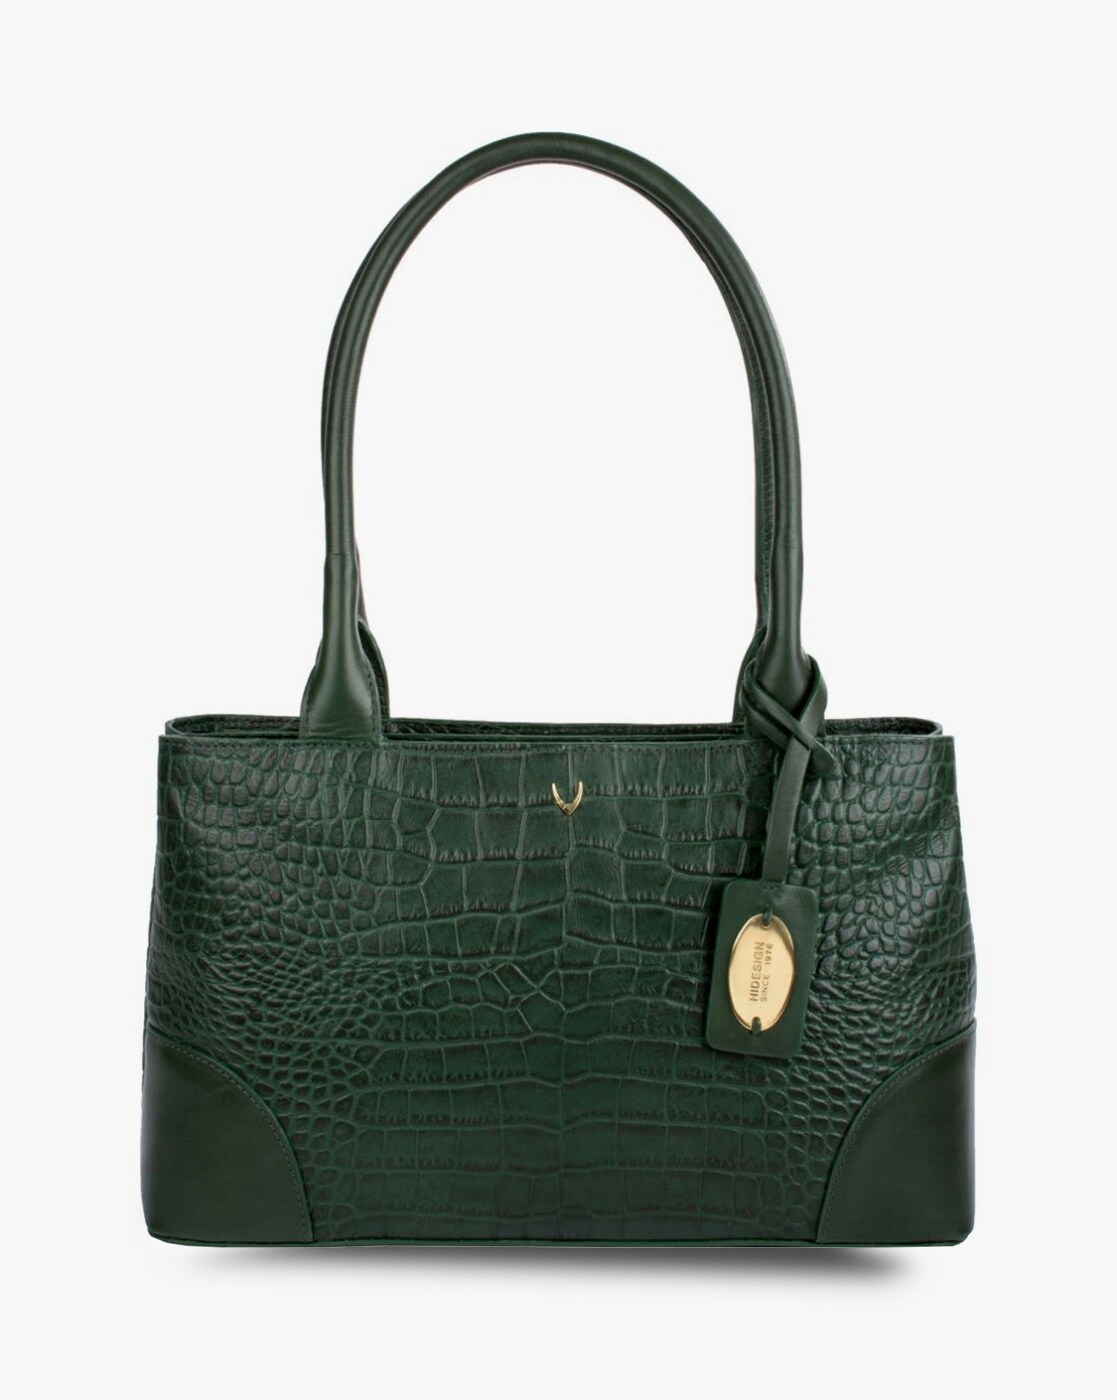 Buy HIDESIGN Women Green Sling Bag Green Online @ Best Price in India